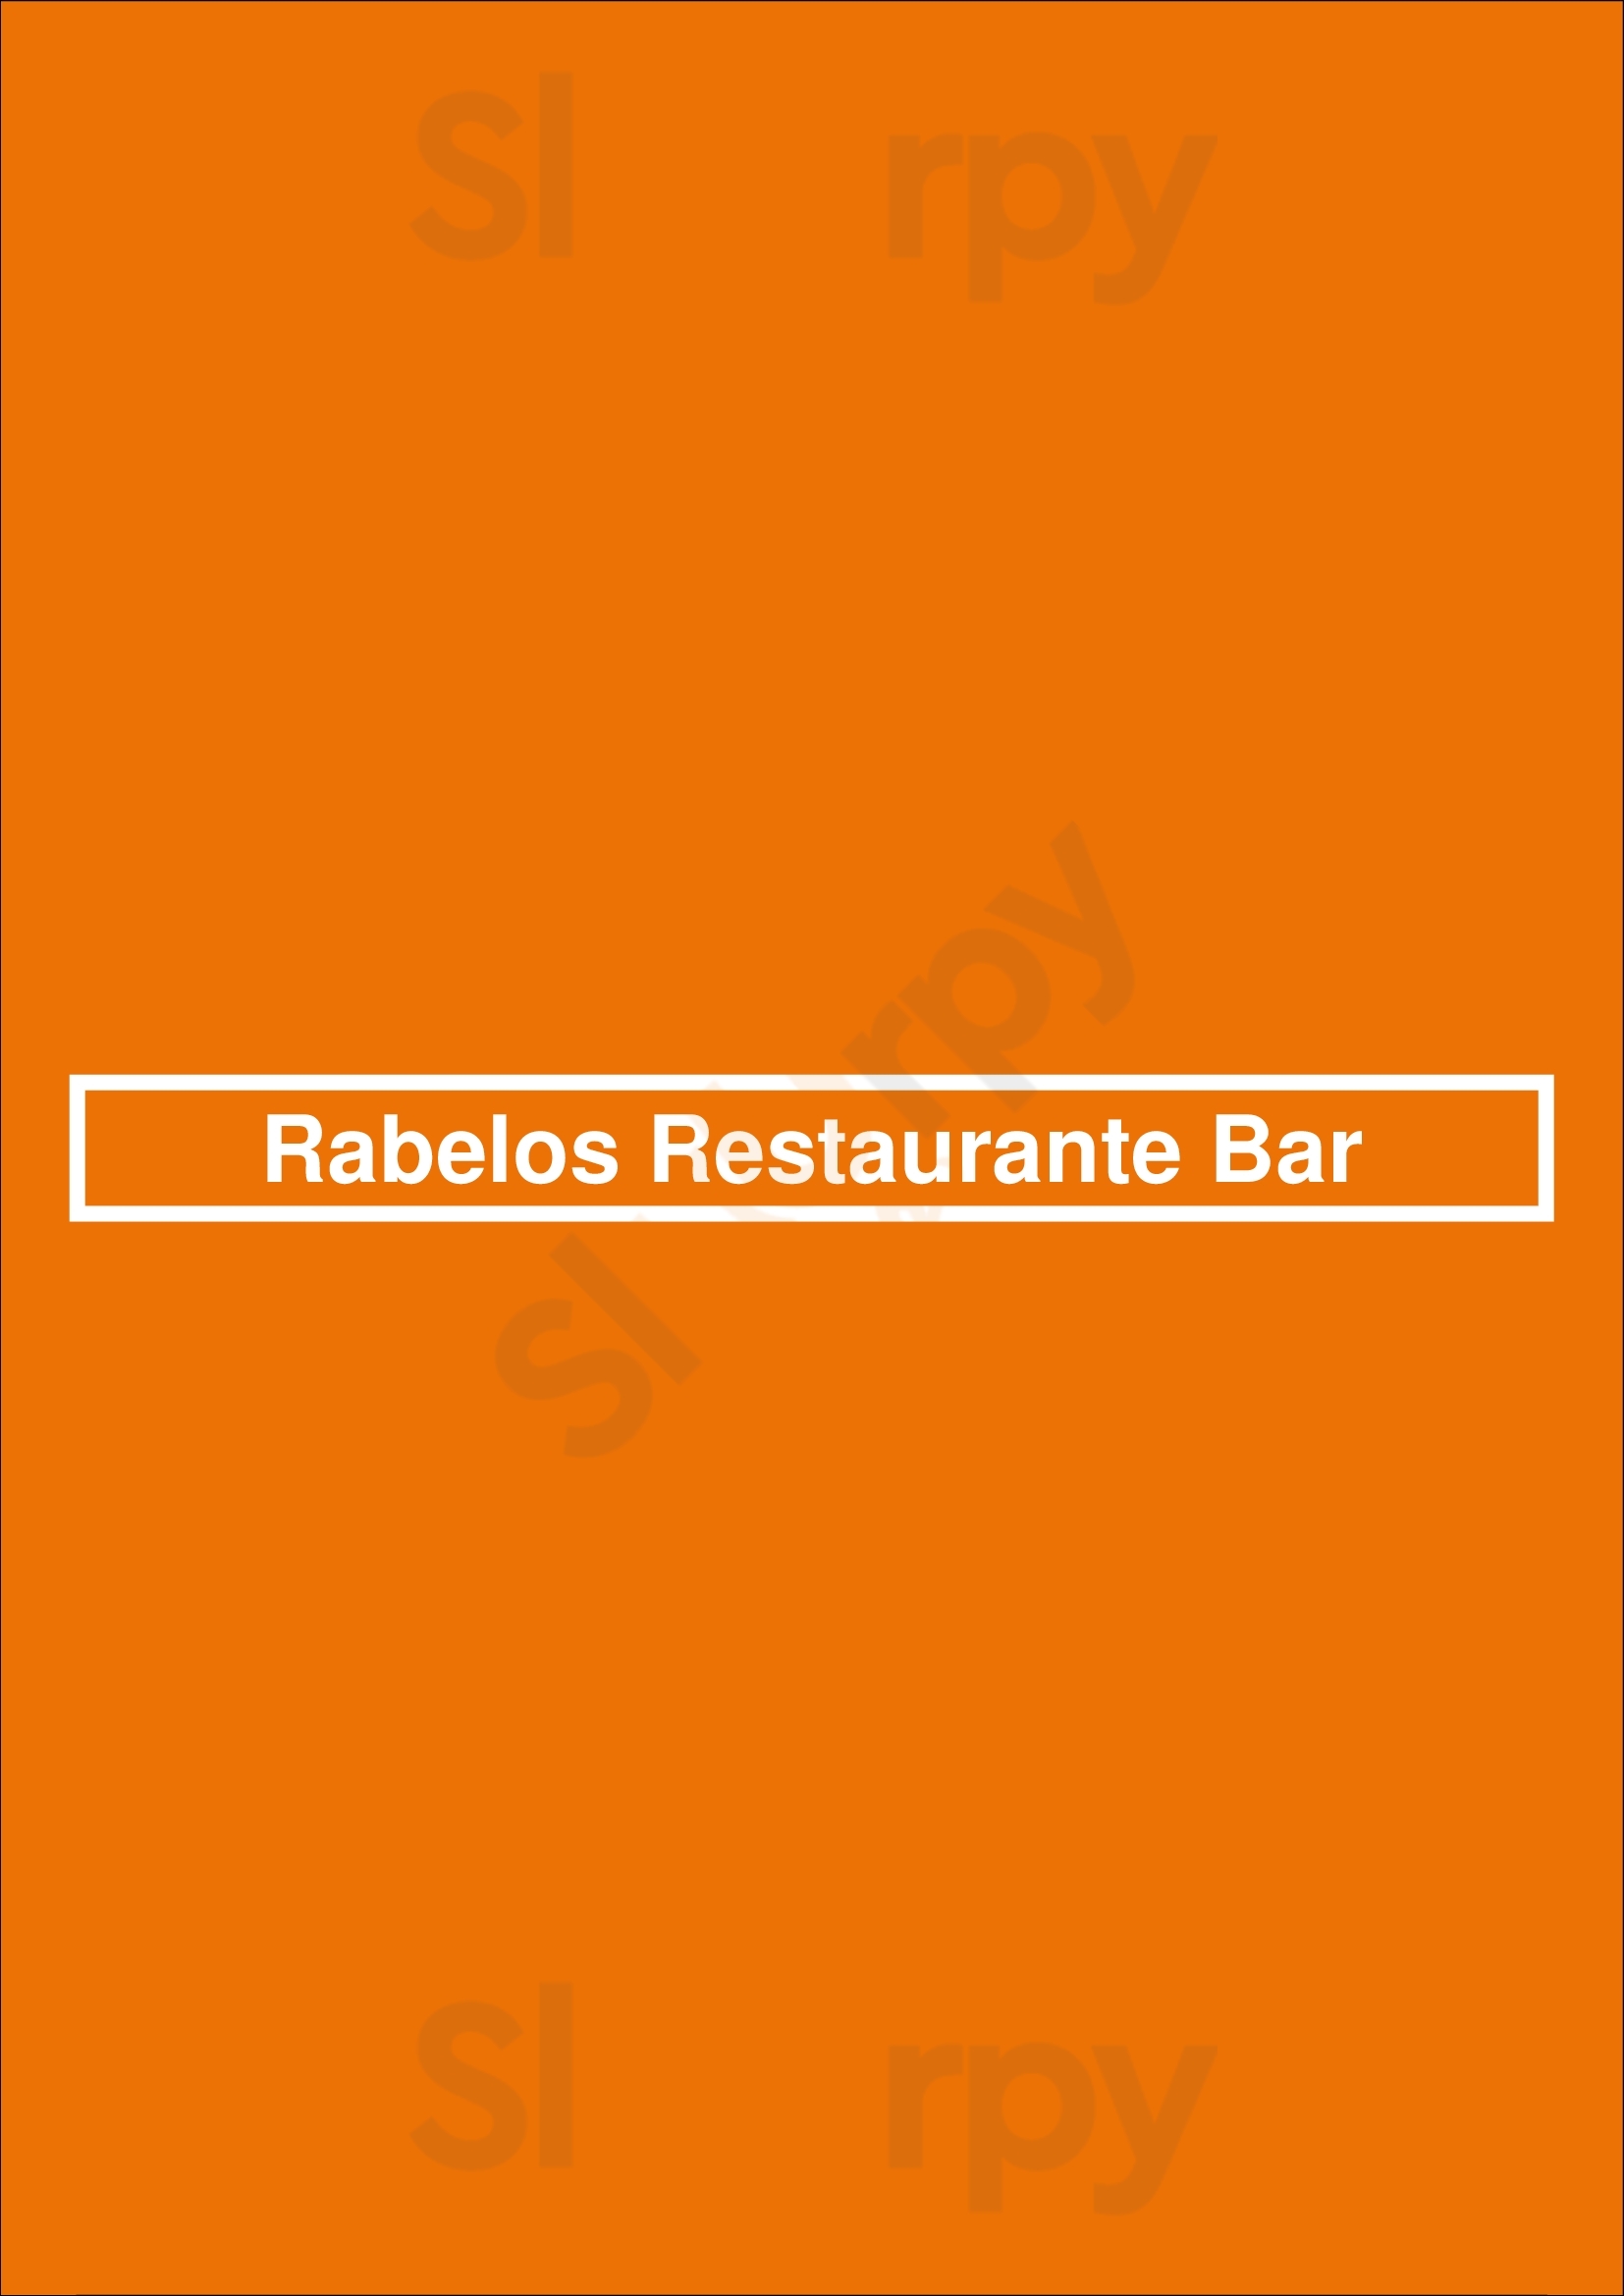 Rabelos Restaurante Bar Vila Nova de Gaia Menu - 1